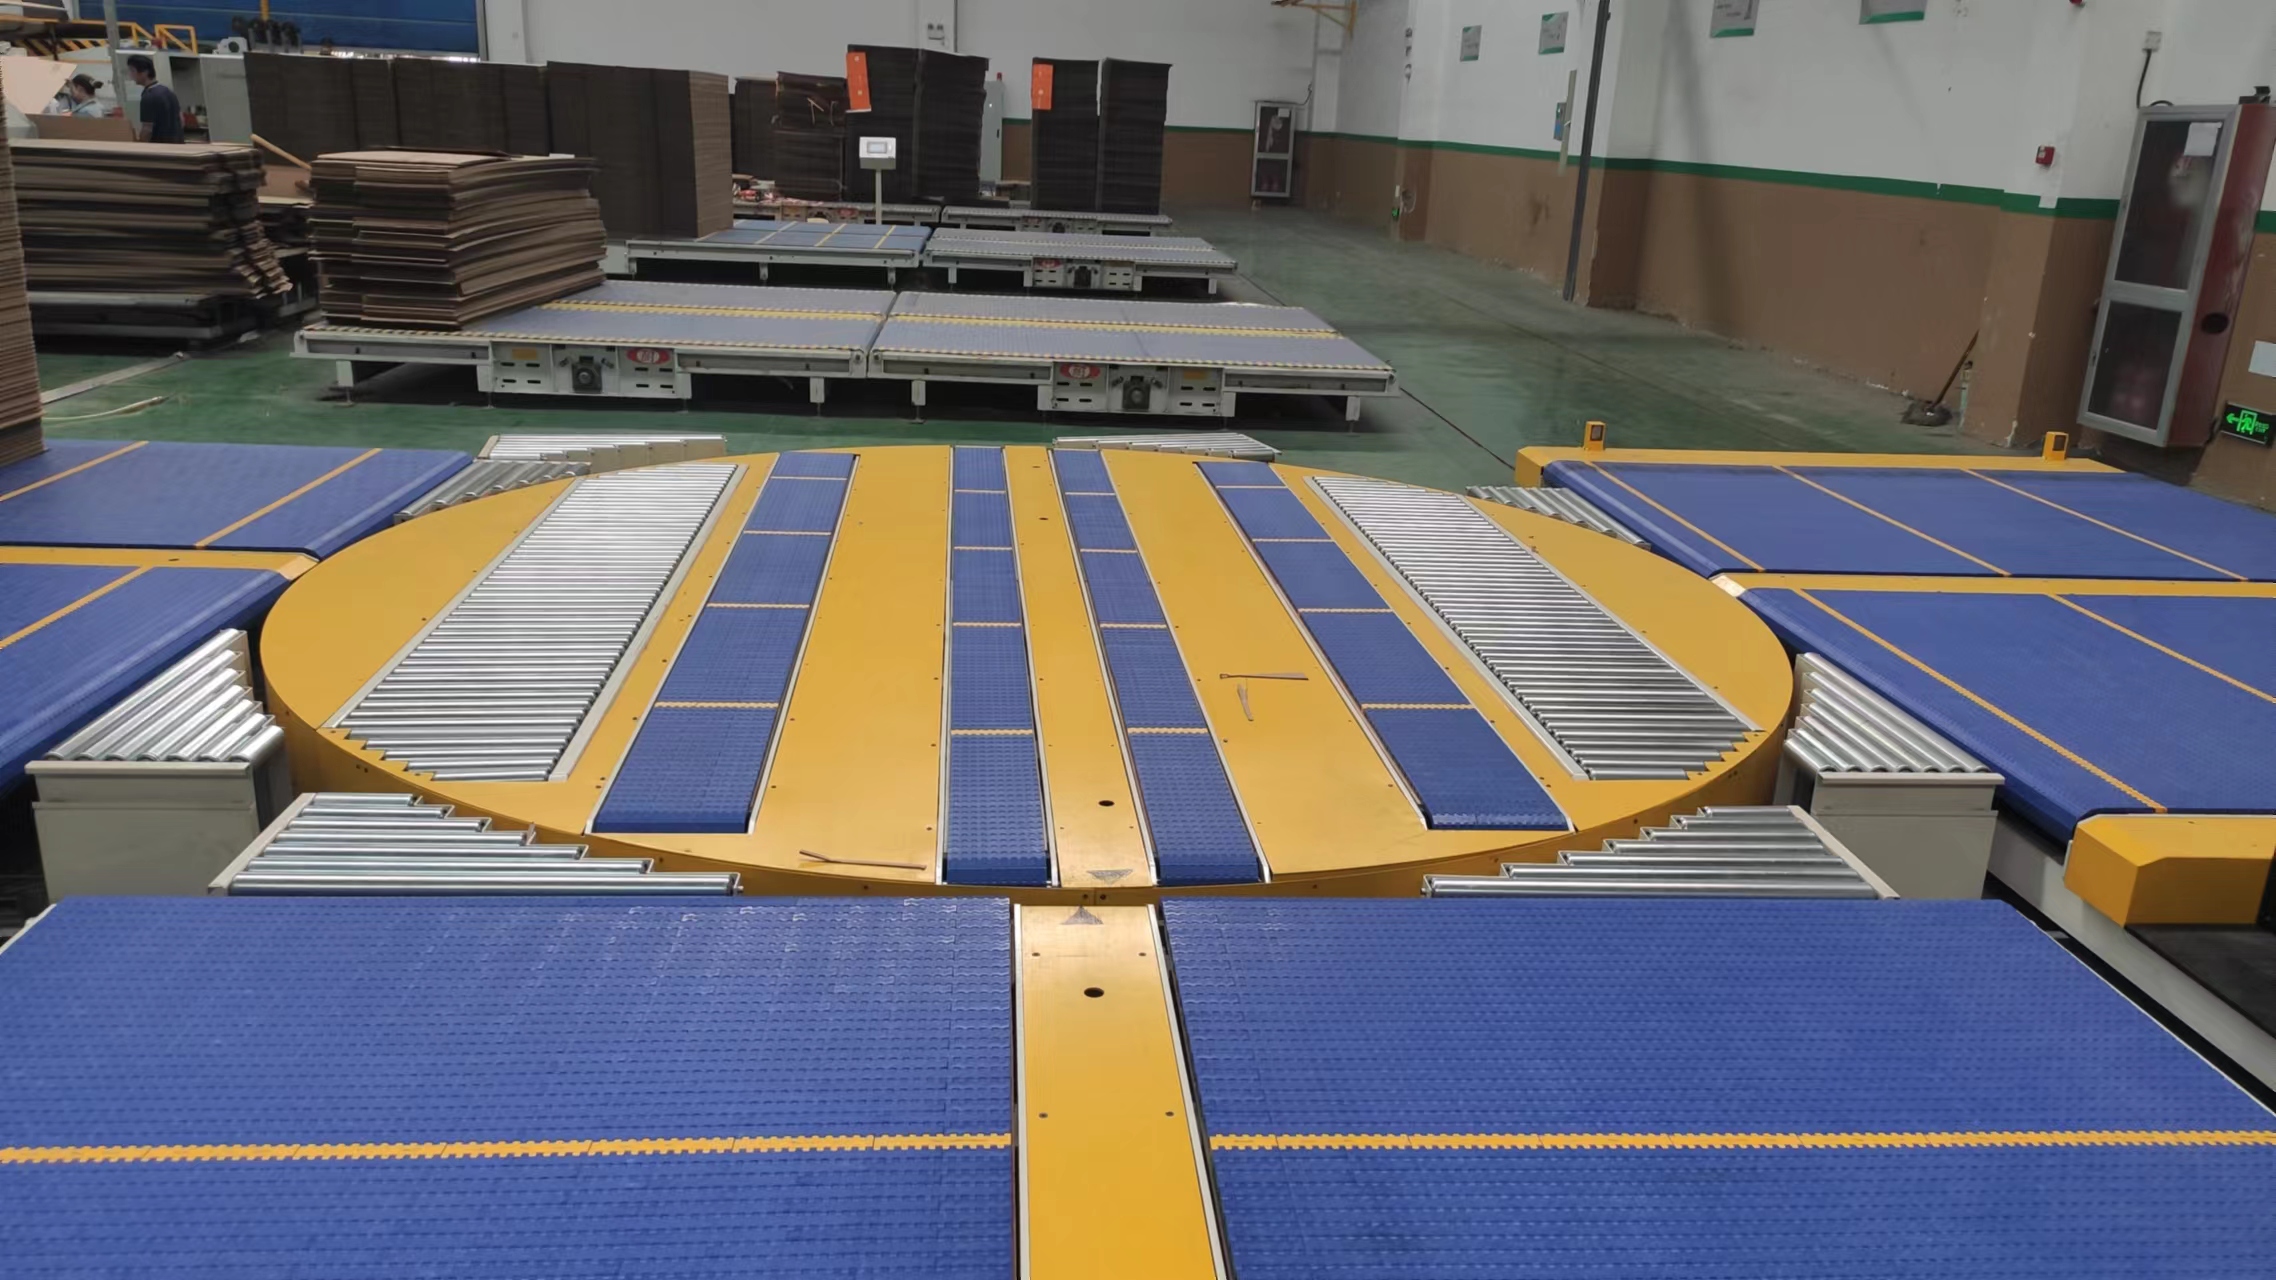 Nws pib Modular siv Conveyor system Plastics Conveyor system Cardboard Conveyor System Featured duab